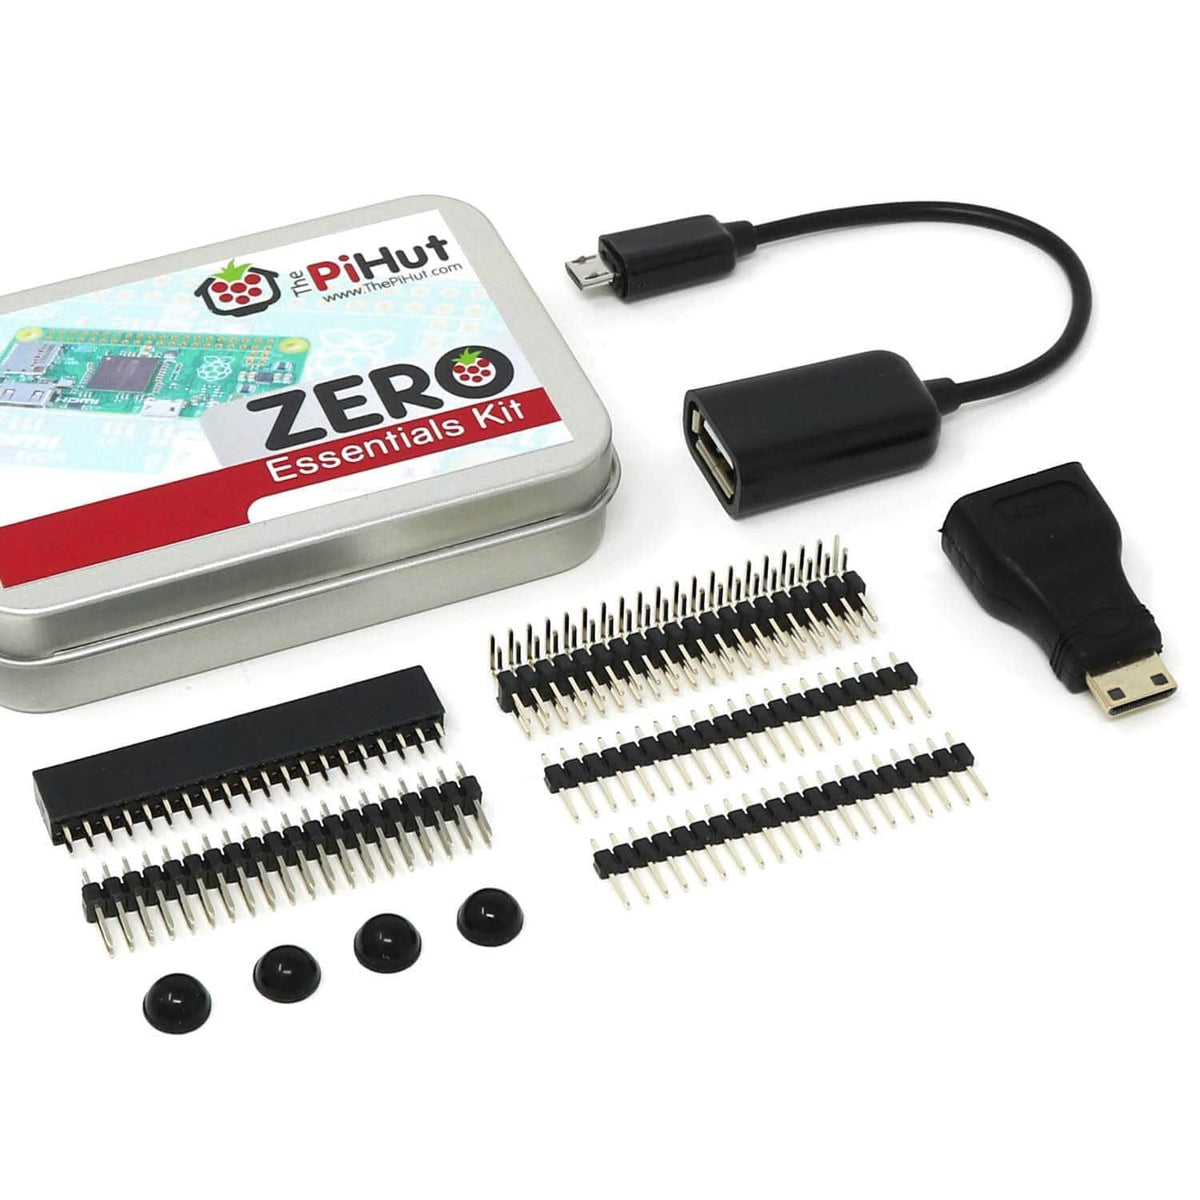 Raspberry Pi Zero 2 W Essentials Kit